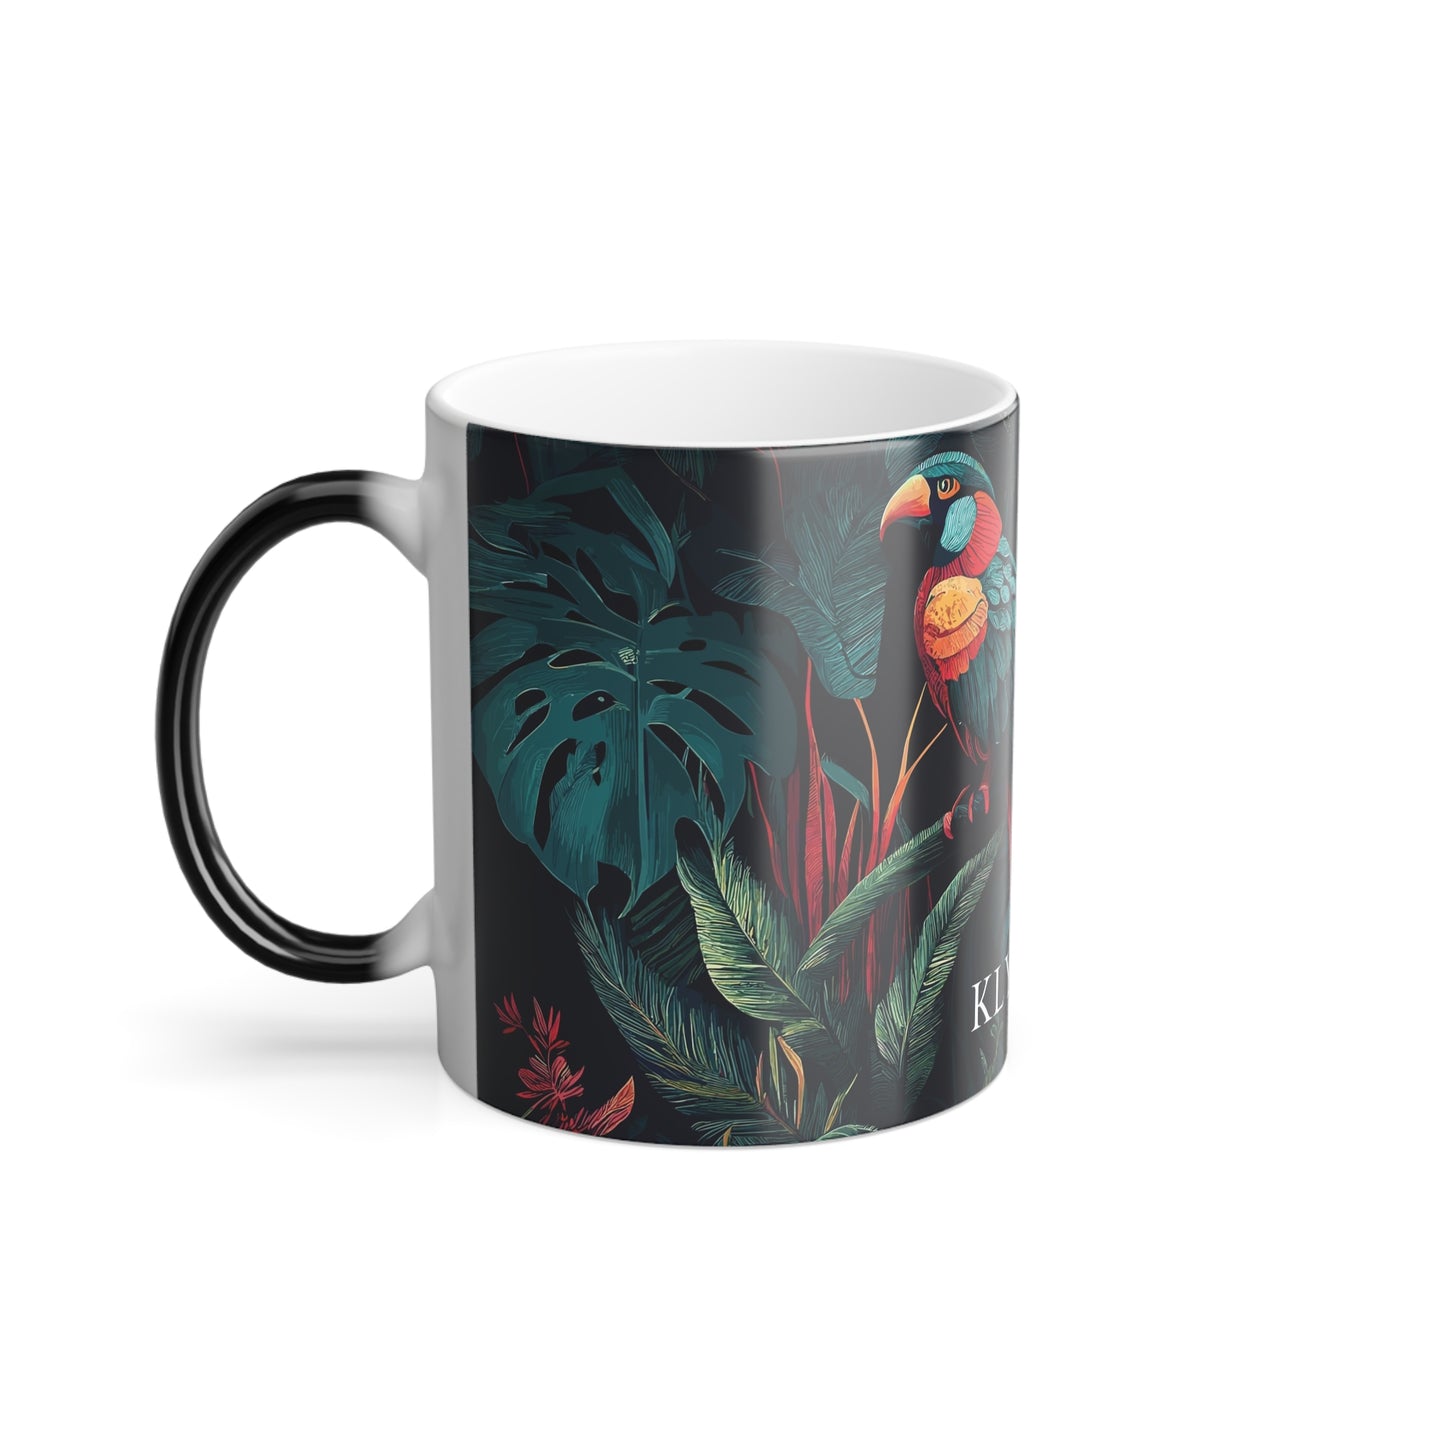 Rainforest - Morphing Mug, 11oz